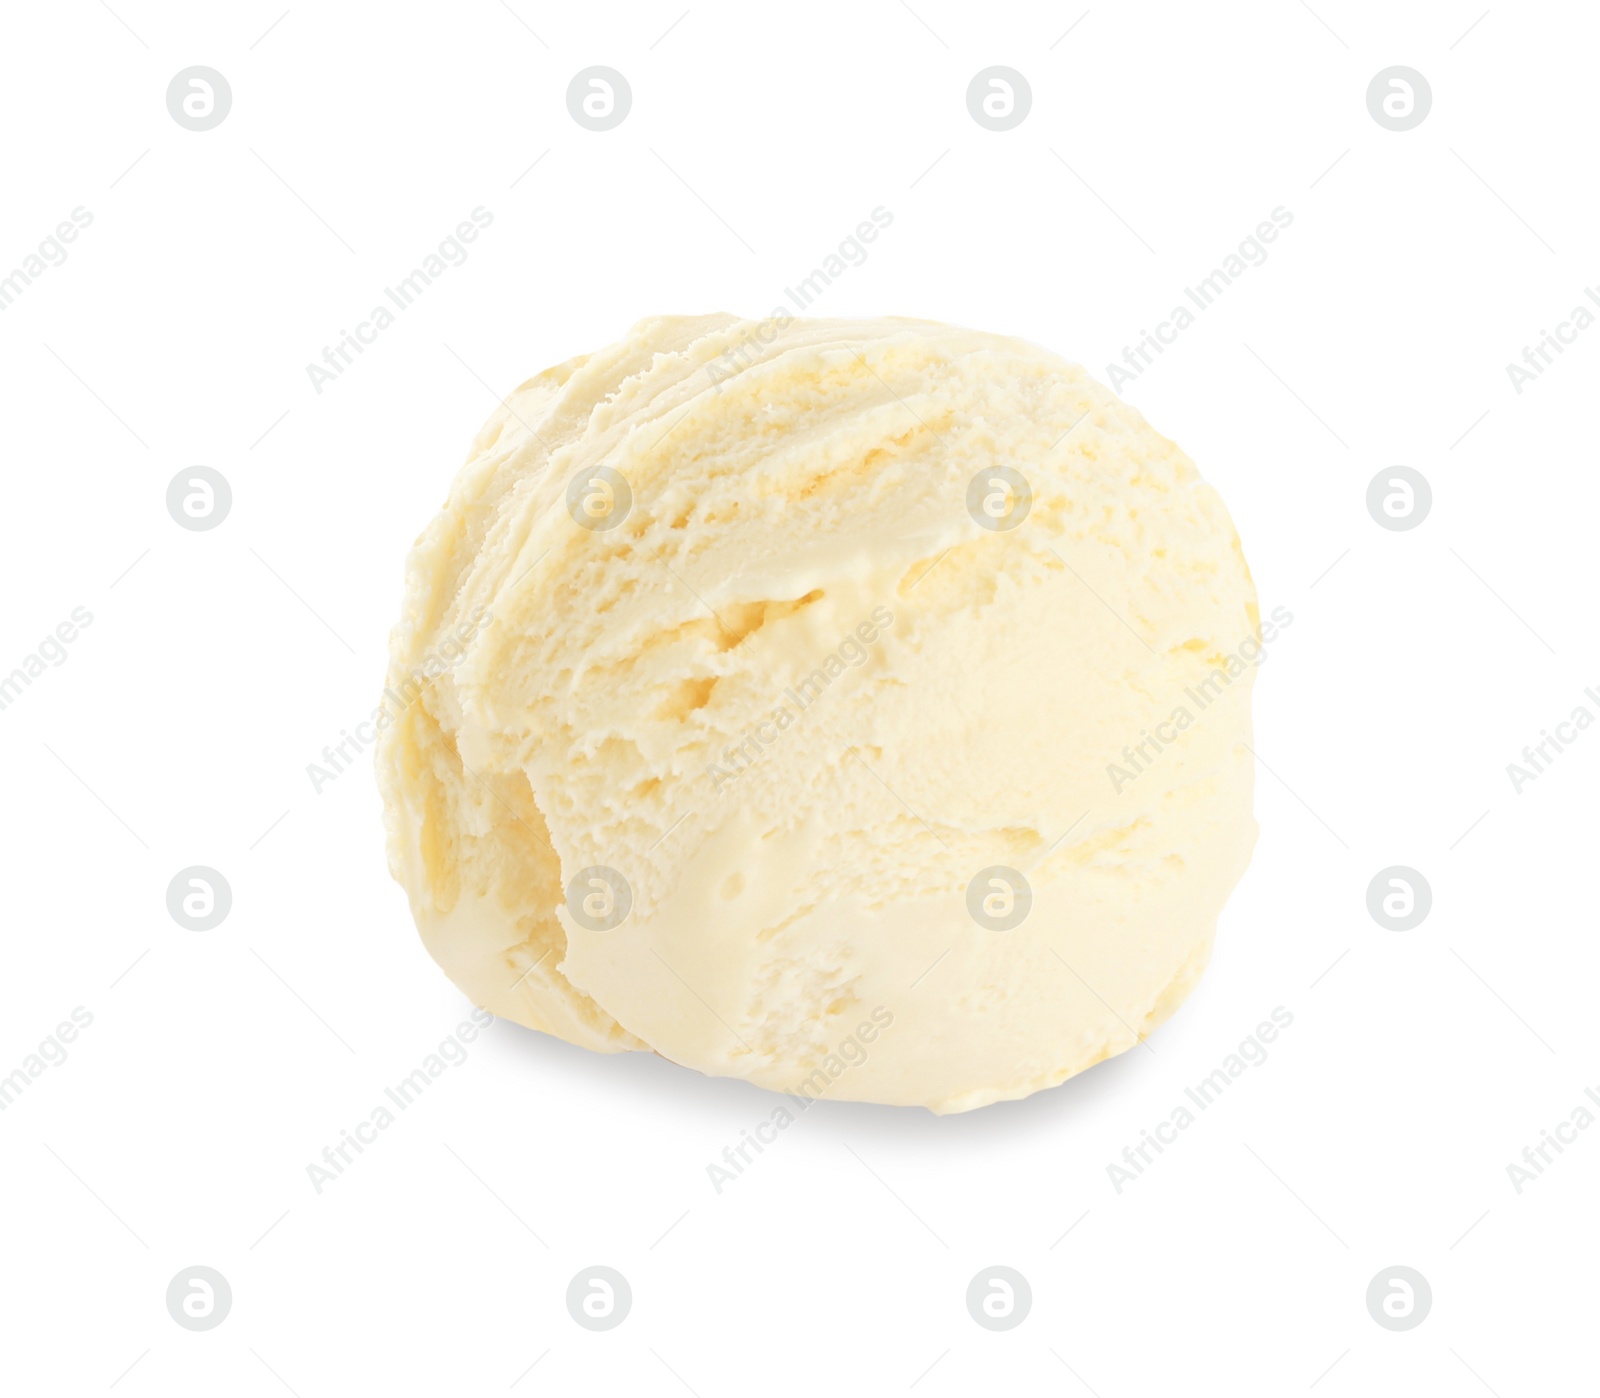 Photo of Delicious banana ice cream isolated on white